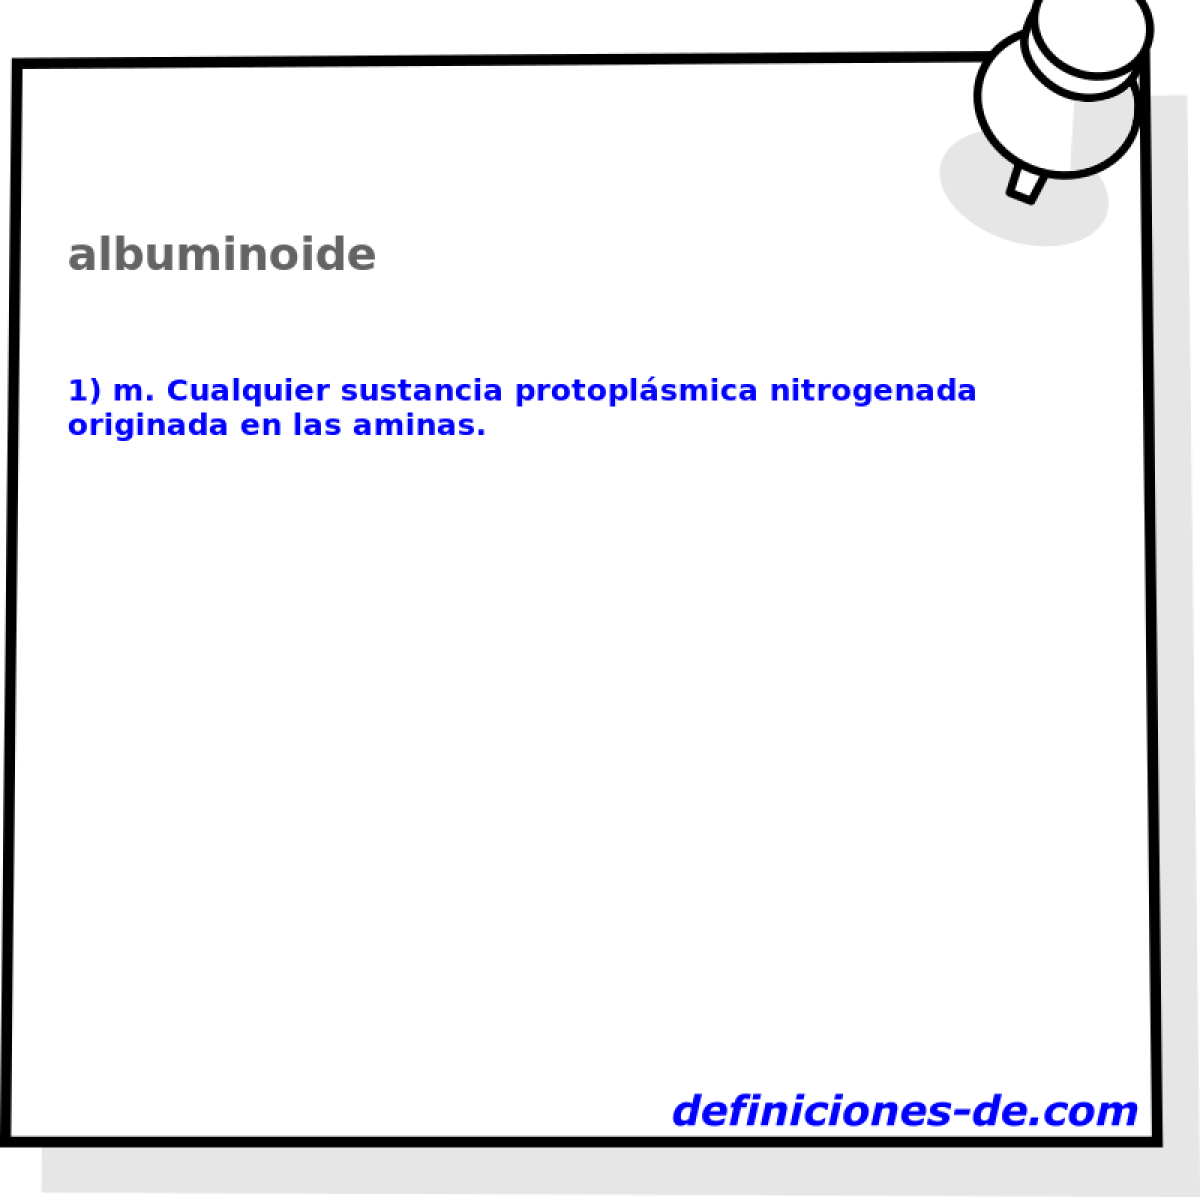 albuminoide 